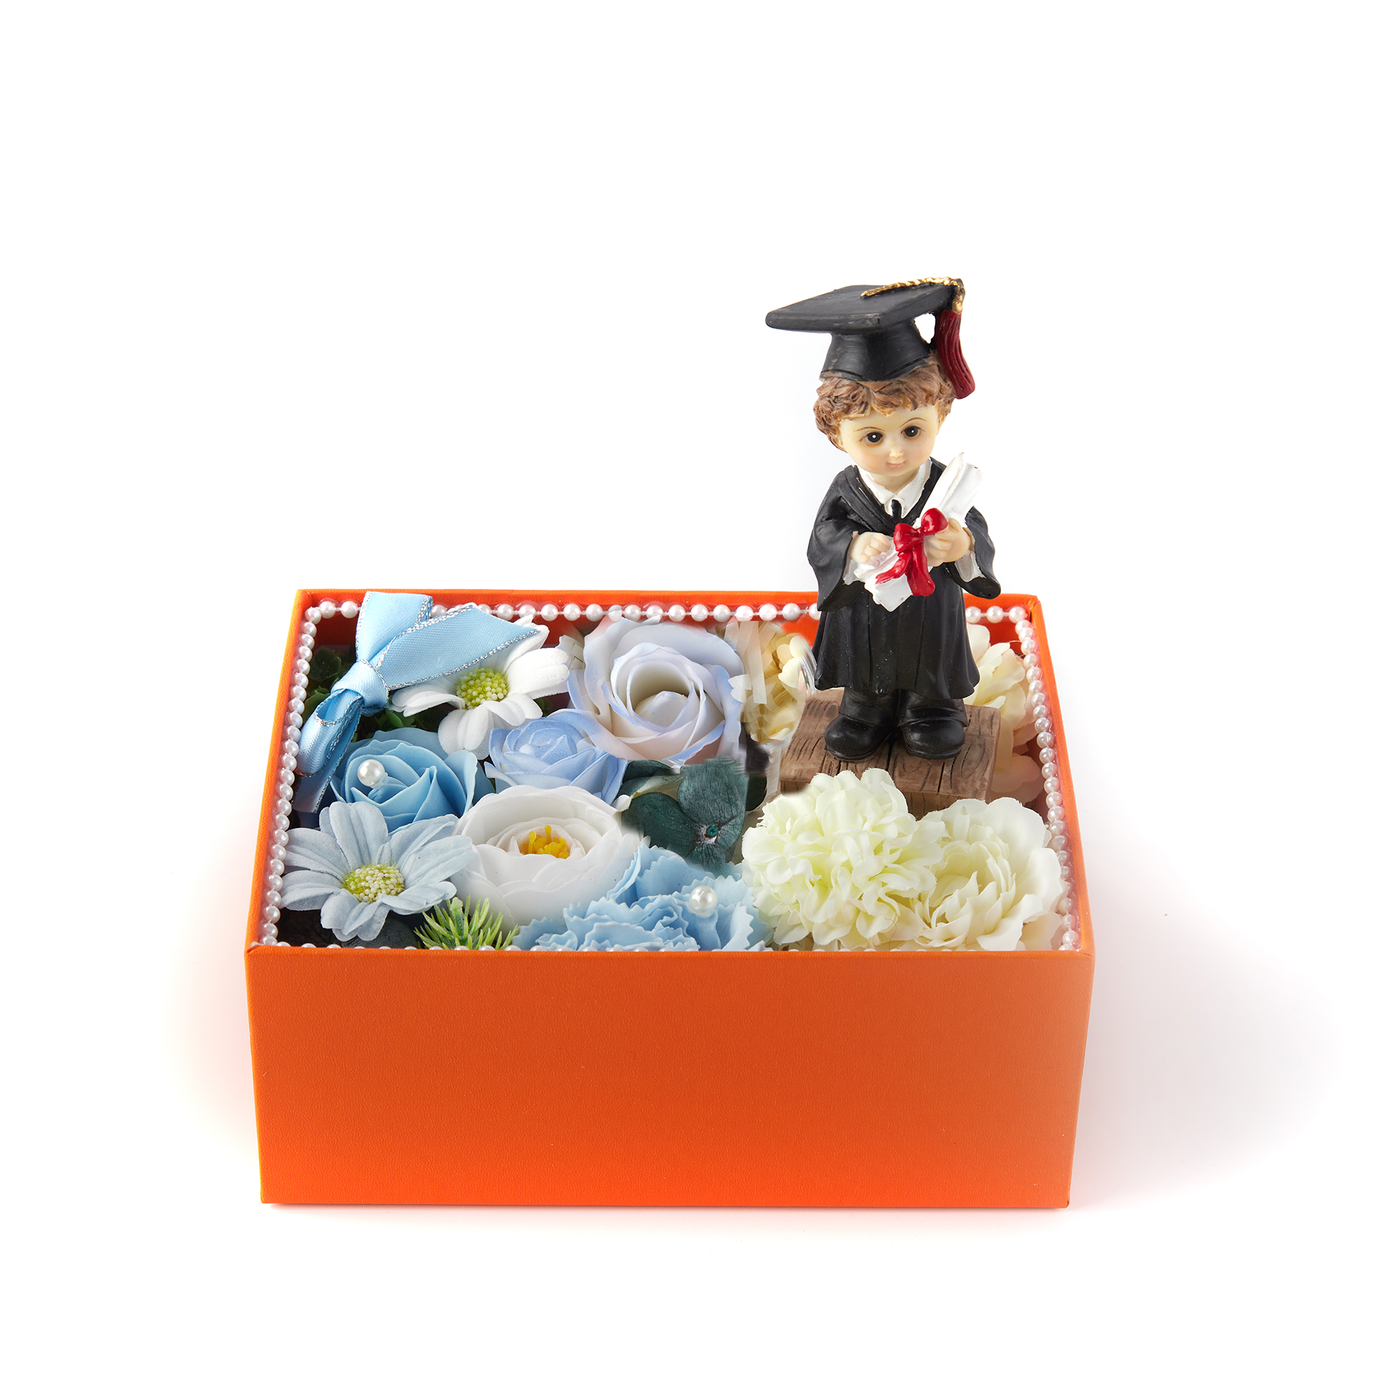 Graduation gift for him, boy grad figurine set